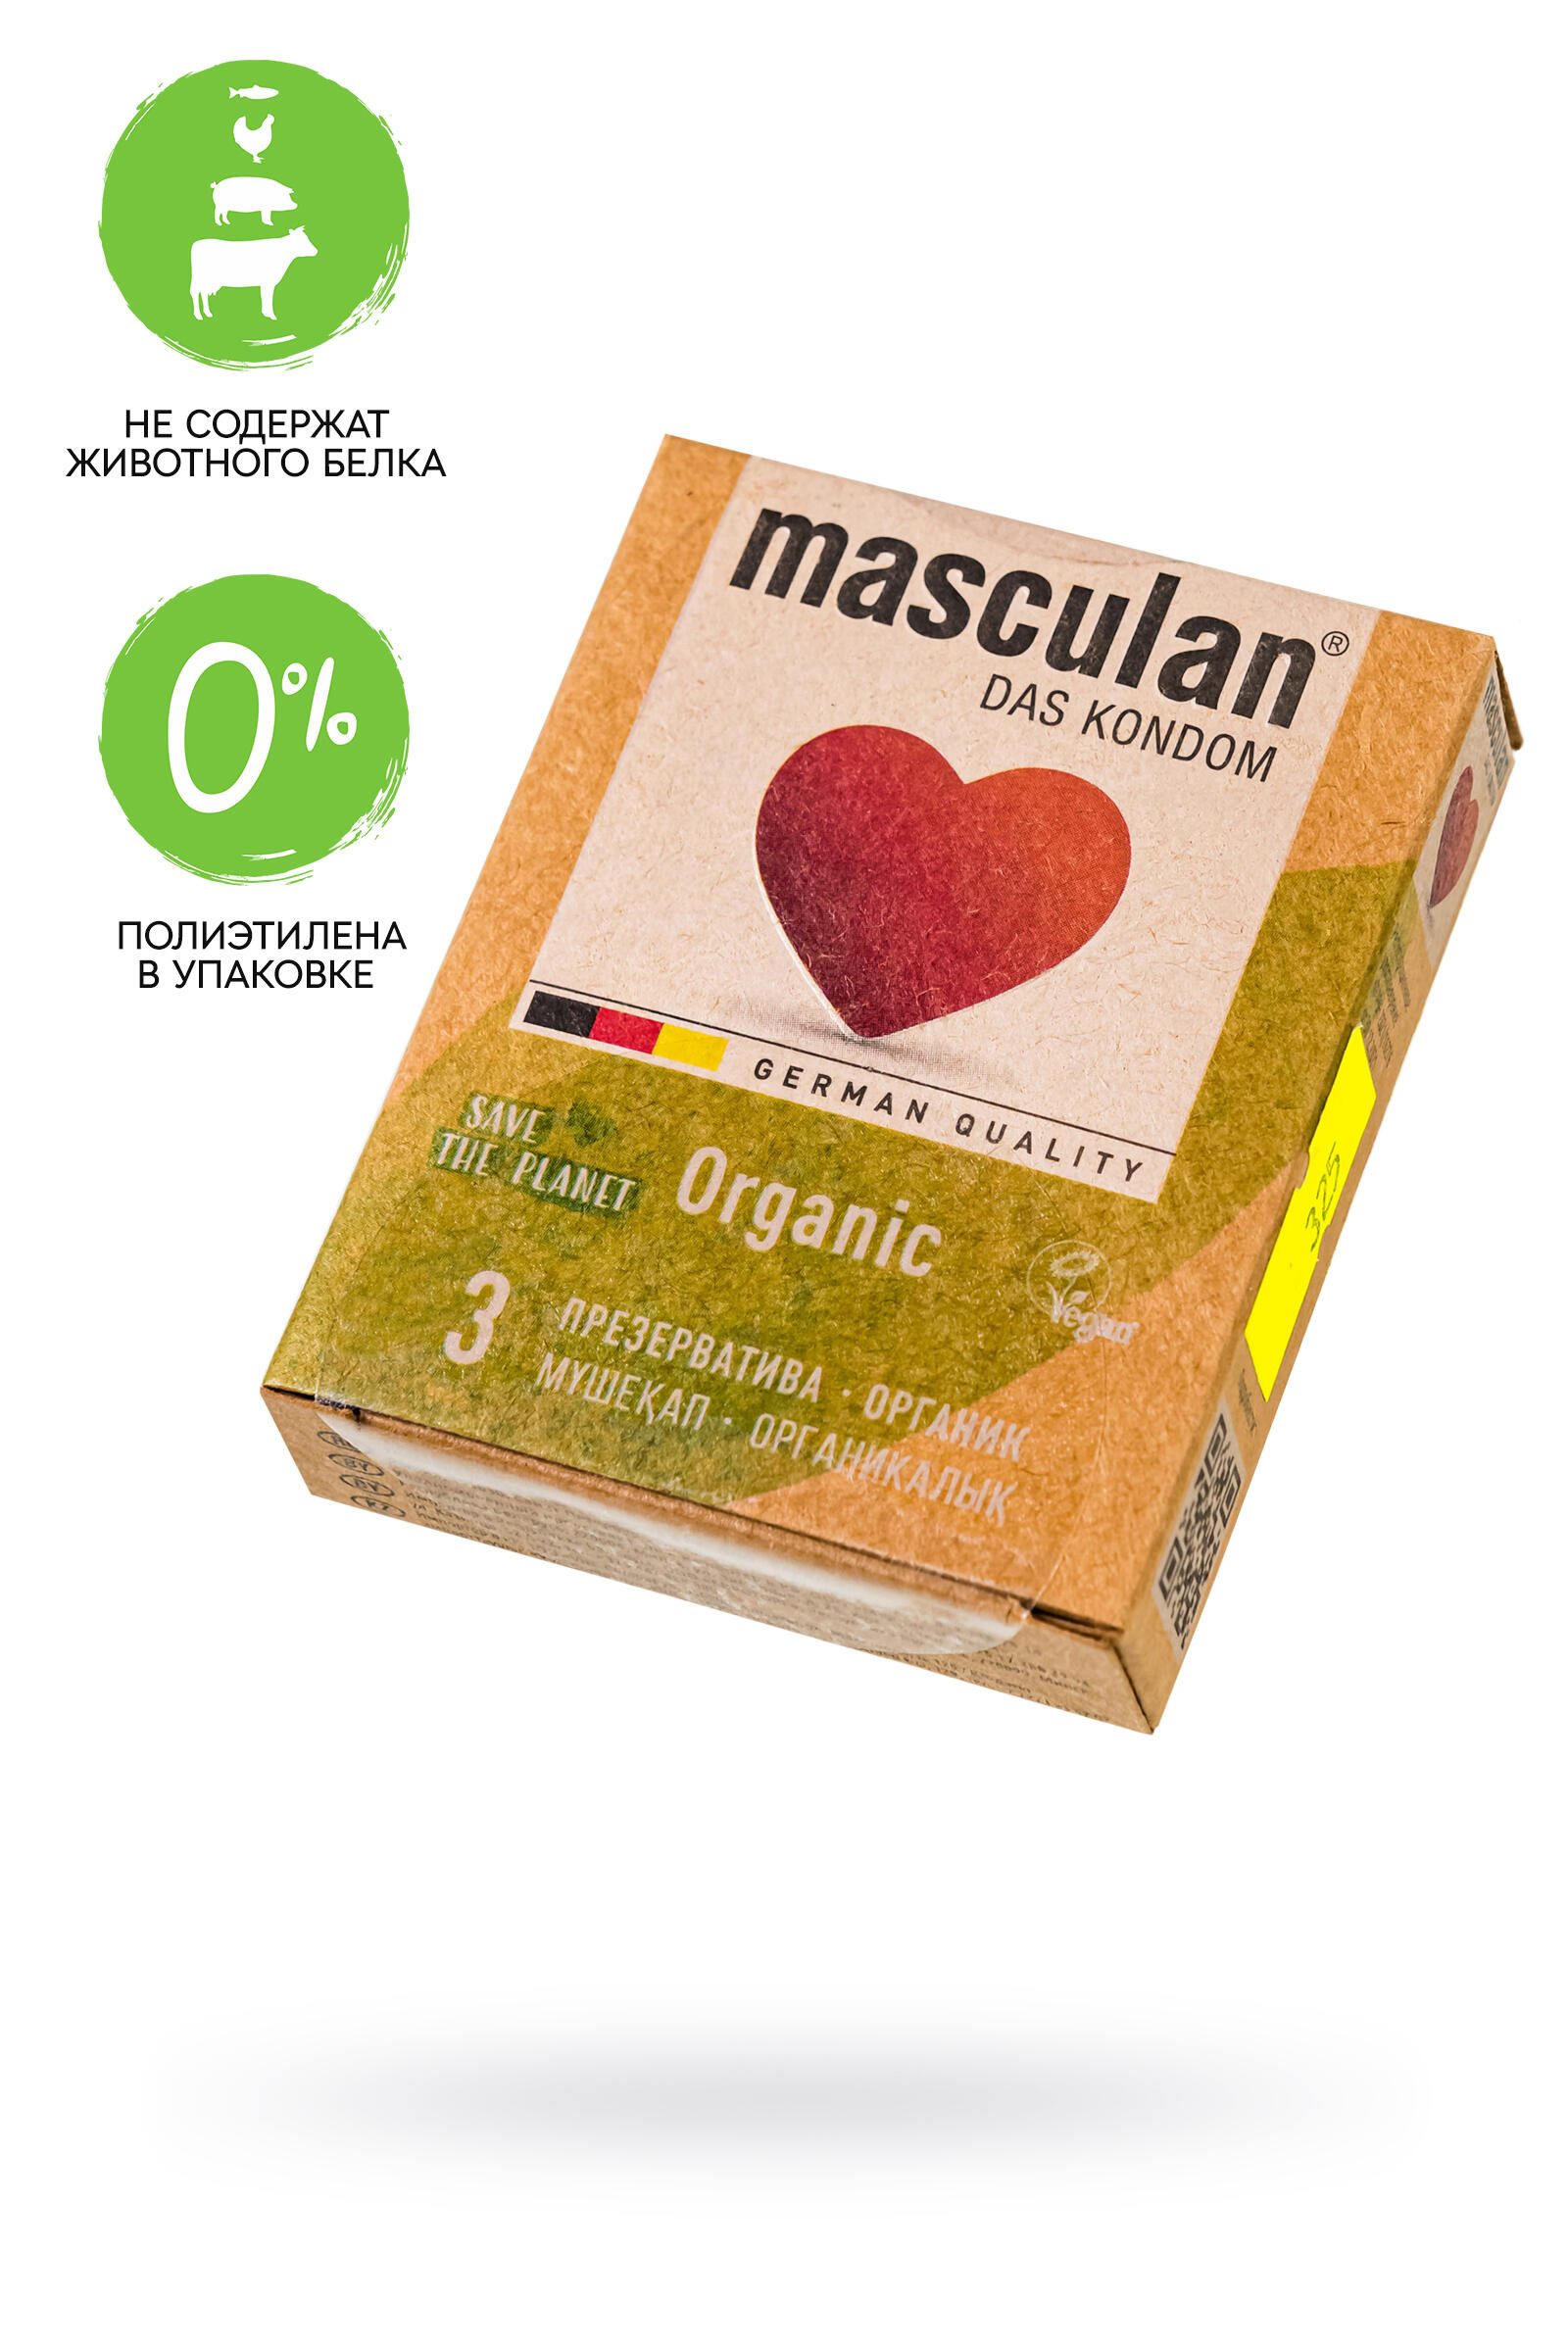 Презервативы Masculan Organic супер тонкие, 3 шт